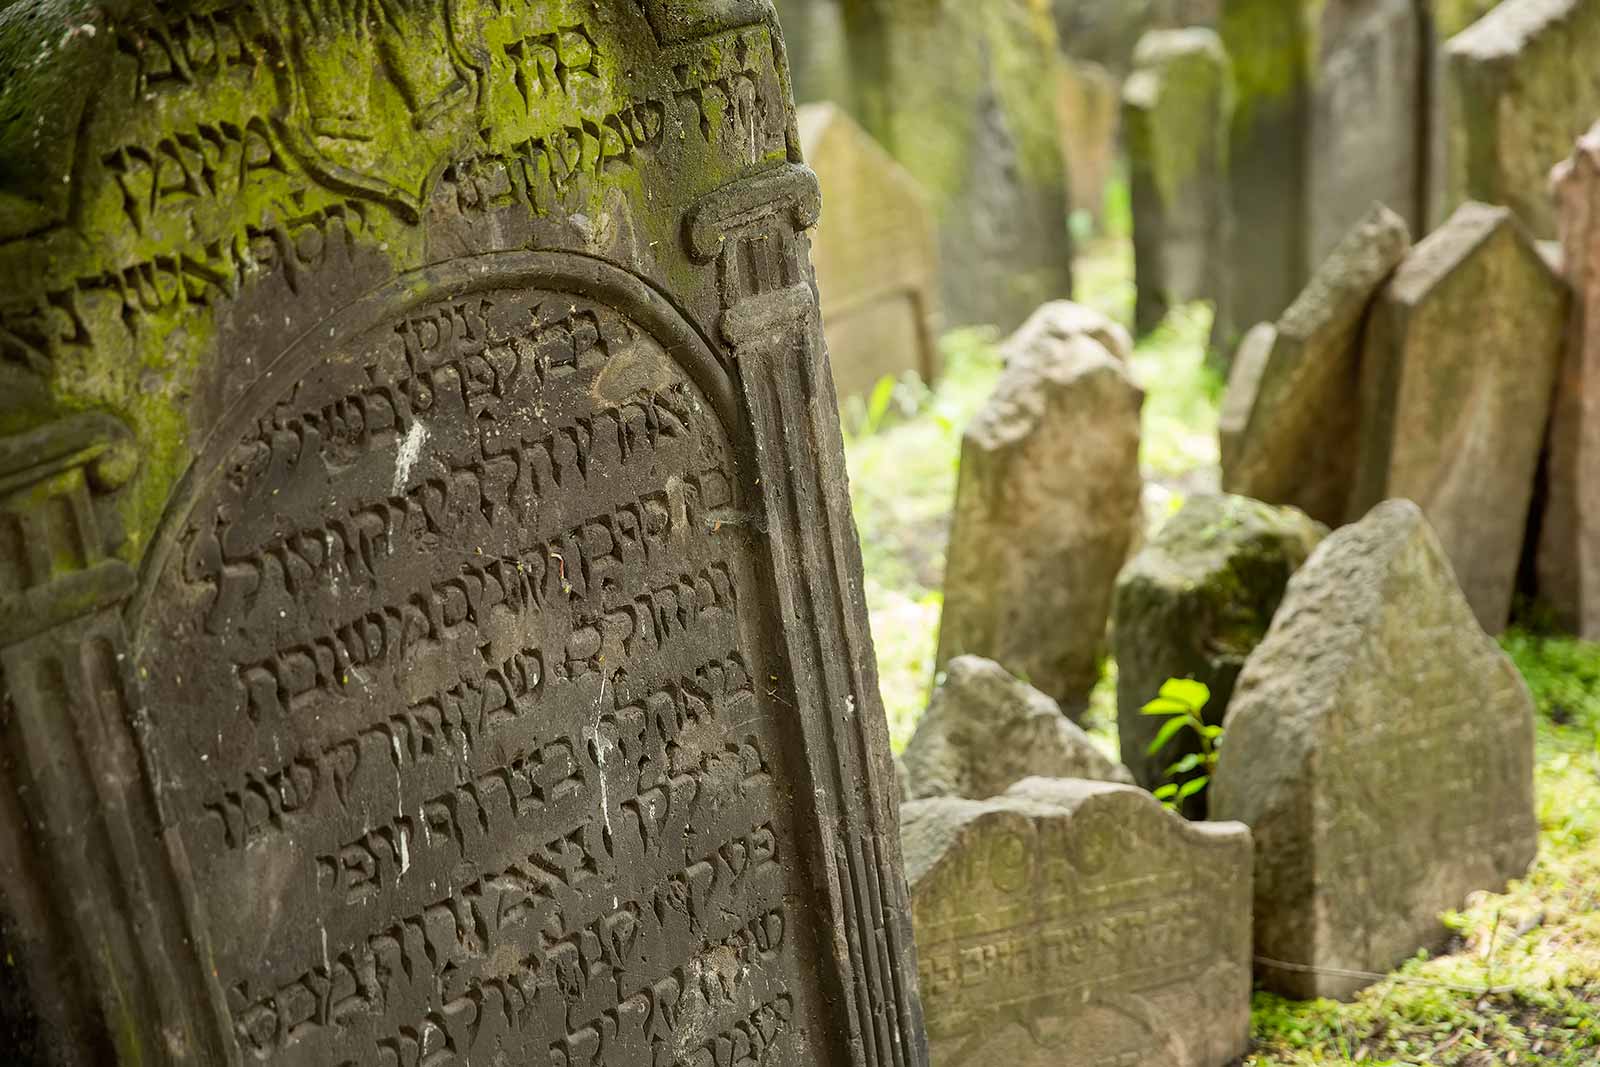 The Old Jewish Cemetery in Prague, Czech Republic.